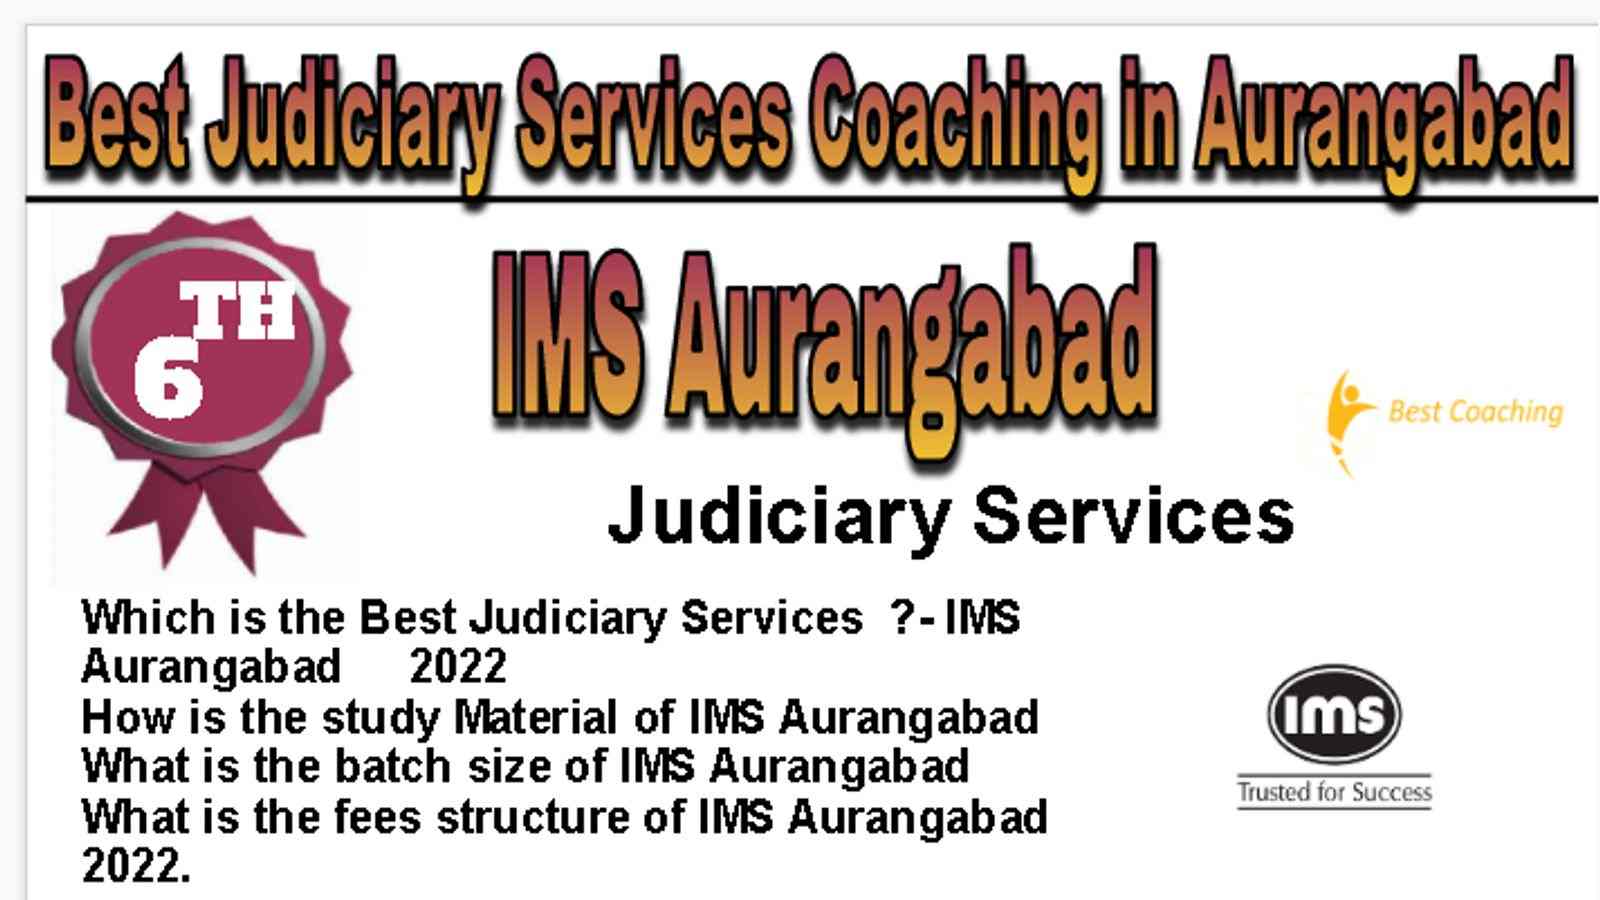 Rank 6 Best Judiciary Services Coaching in Aurangabad